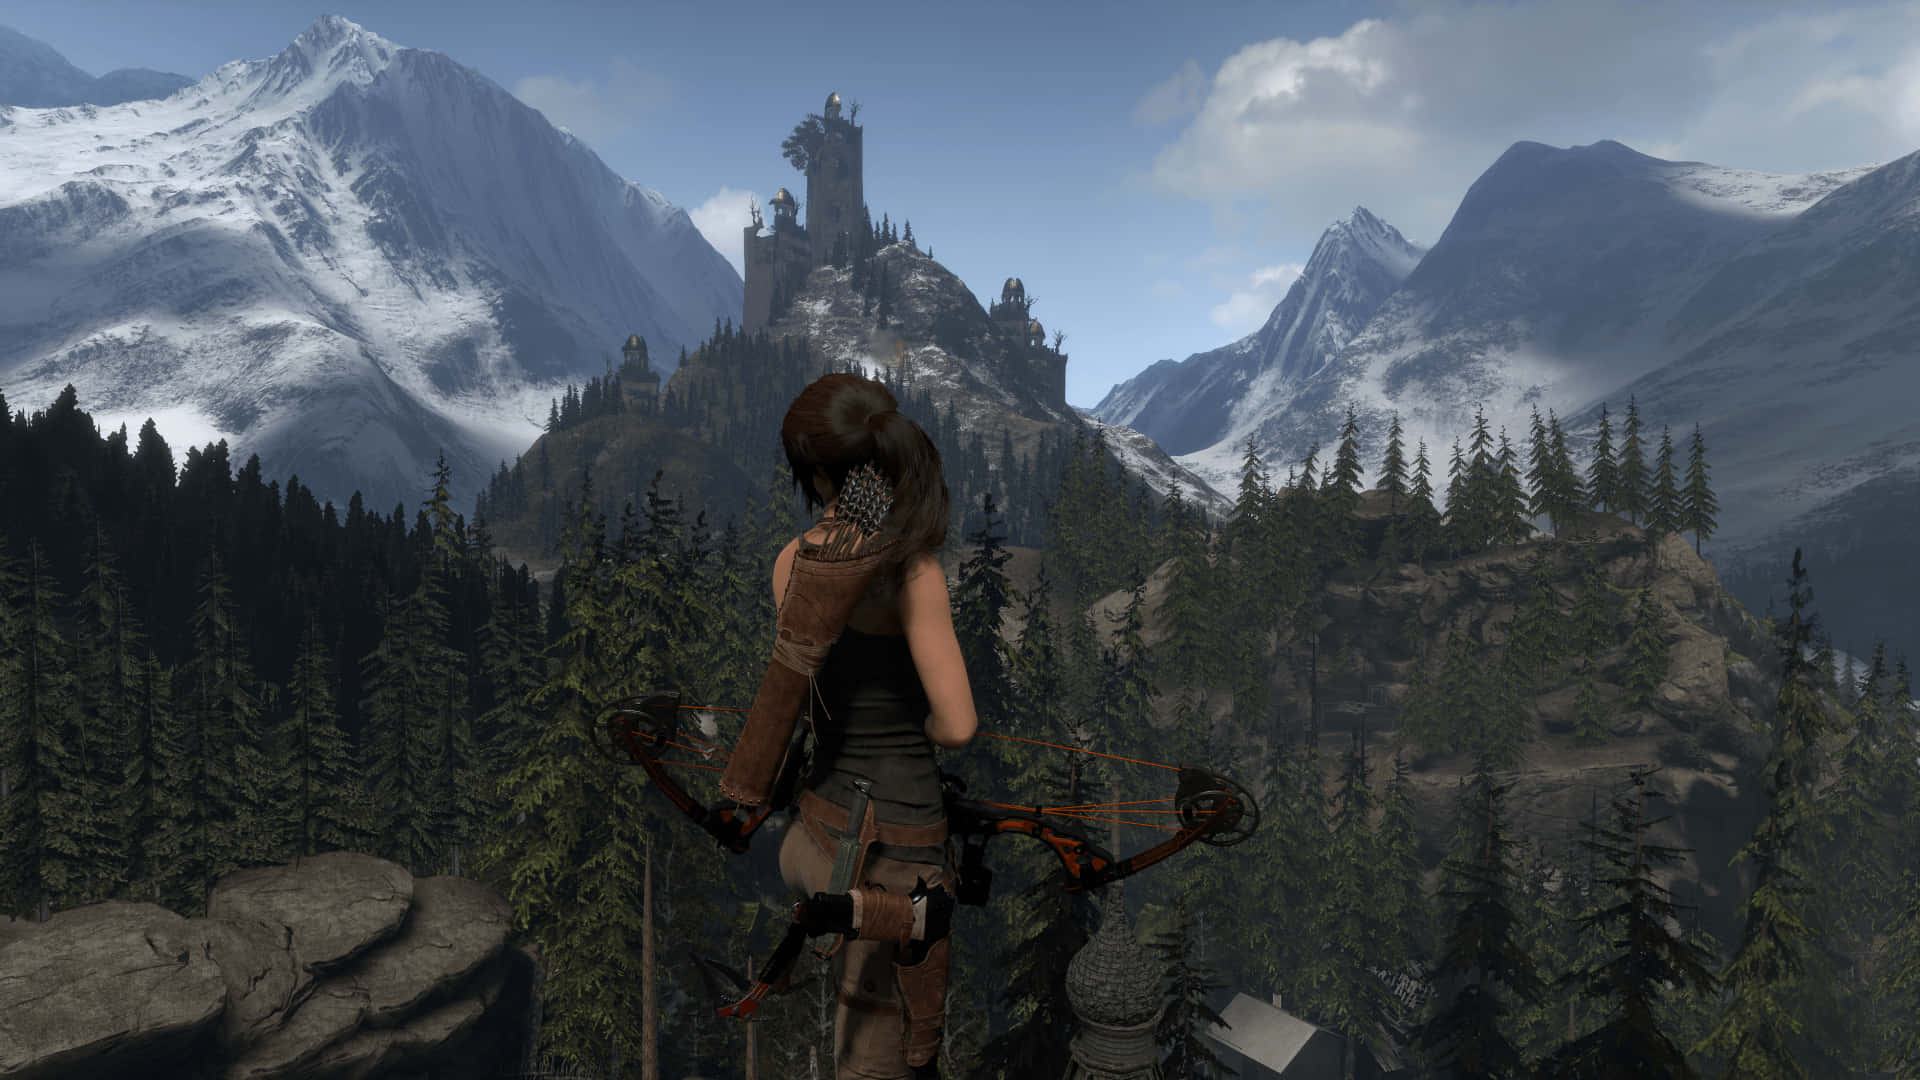 1920x1080rise Of The Tomb Raider, Lara Croft Med Båge Och Pil På Toppen Av Berget Som Bakgrundsbild.